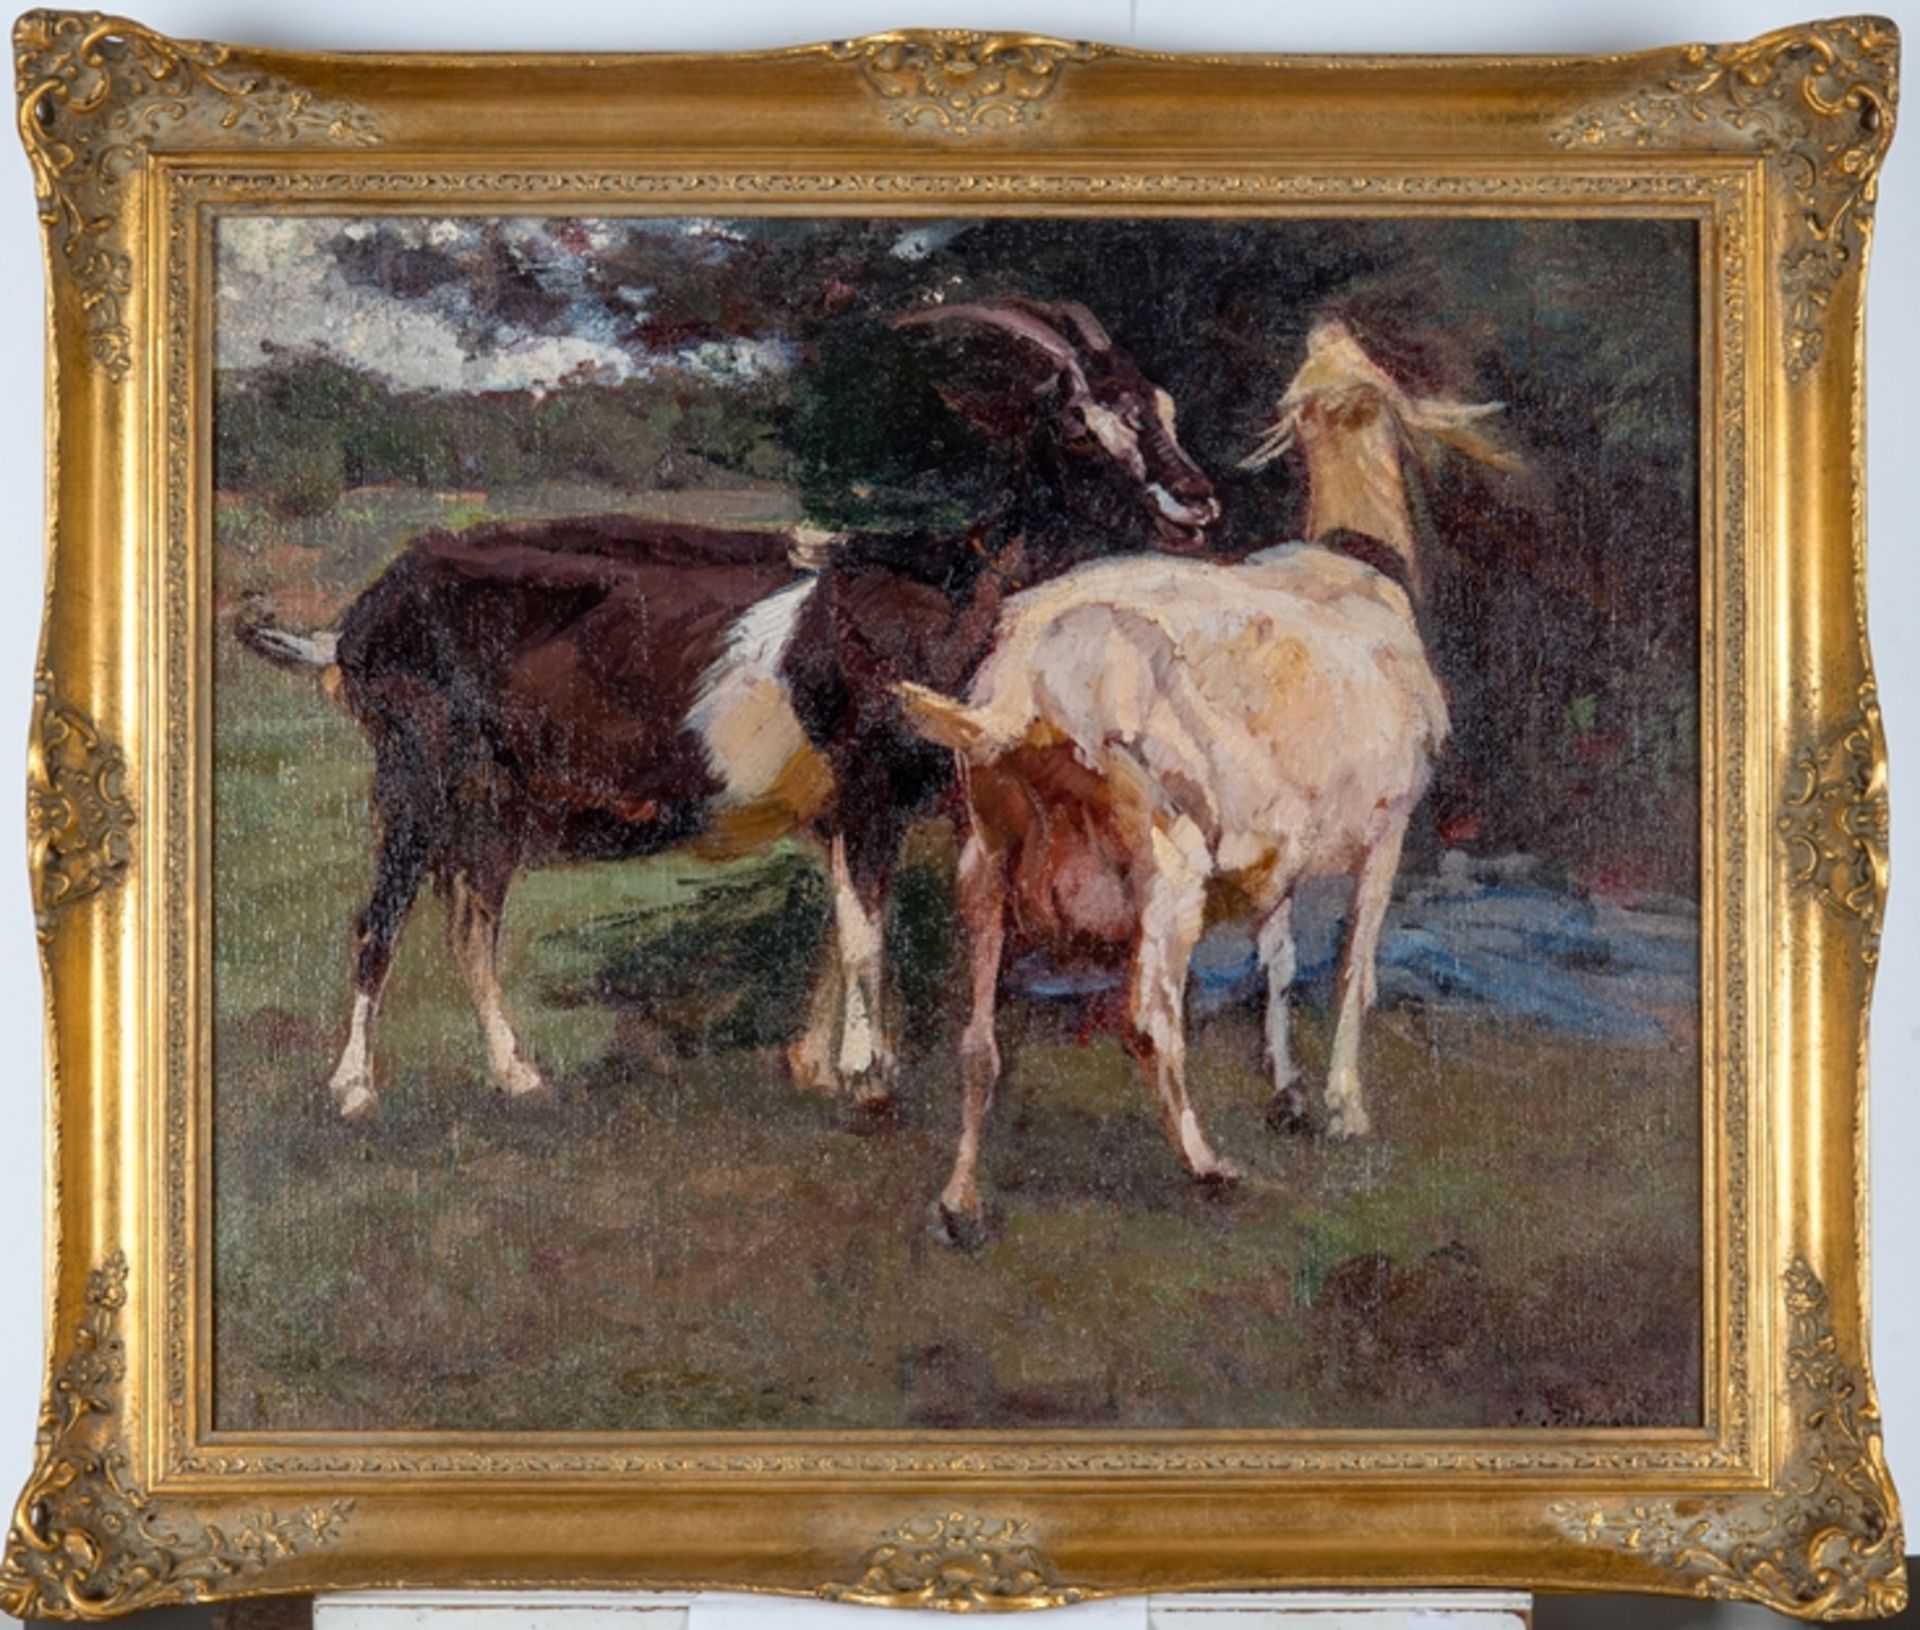 Junghanns, Julius Paul (1876 - 1958)Zwei Ziegen im Baumschatten. Oel/Lwd., 57 x 70 cm, rechts u.